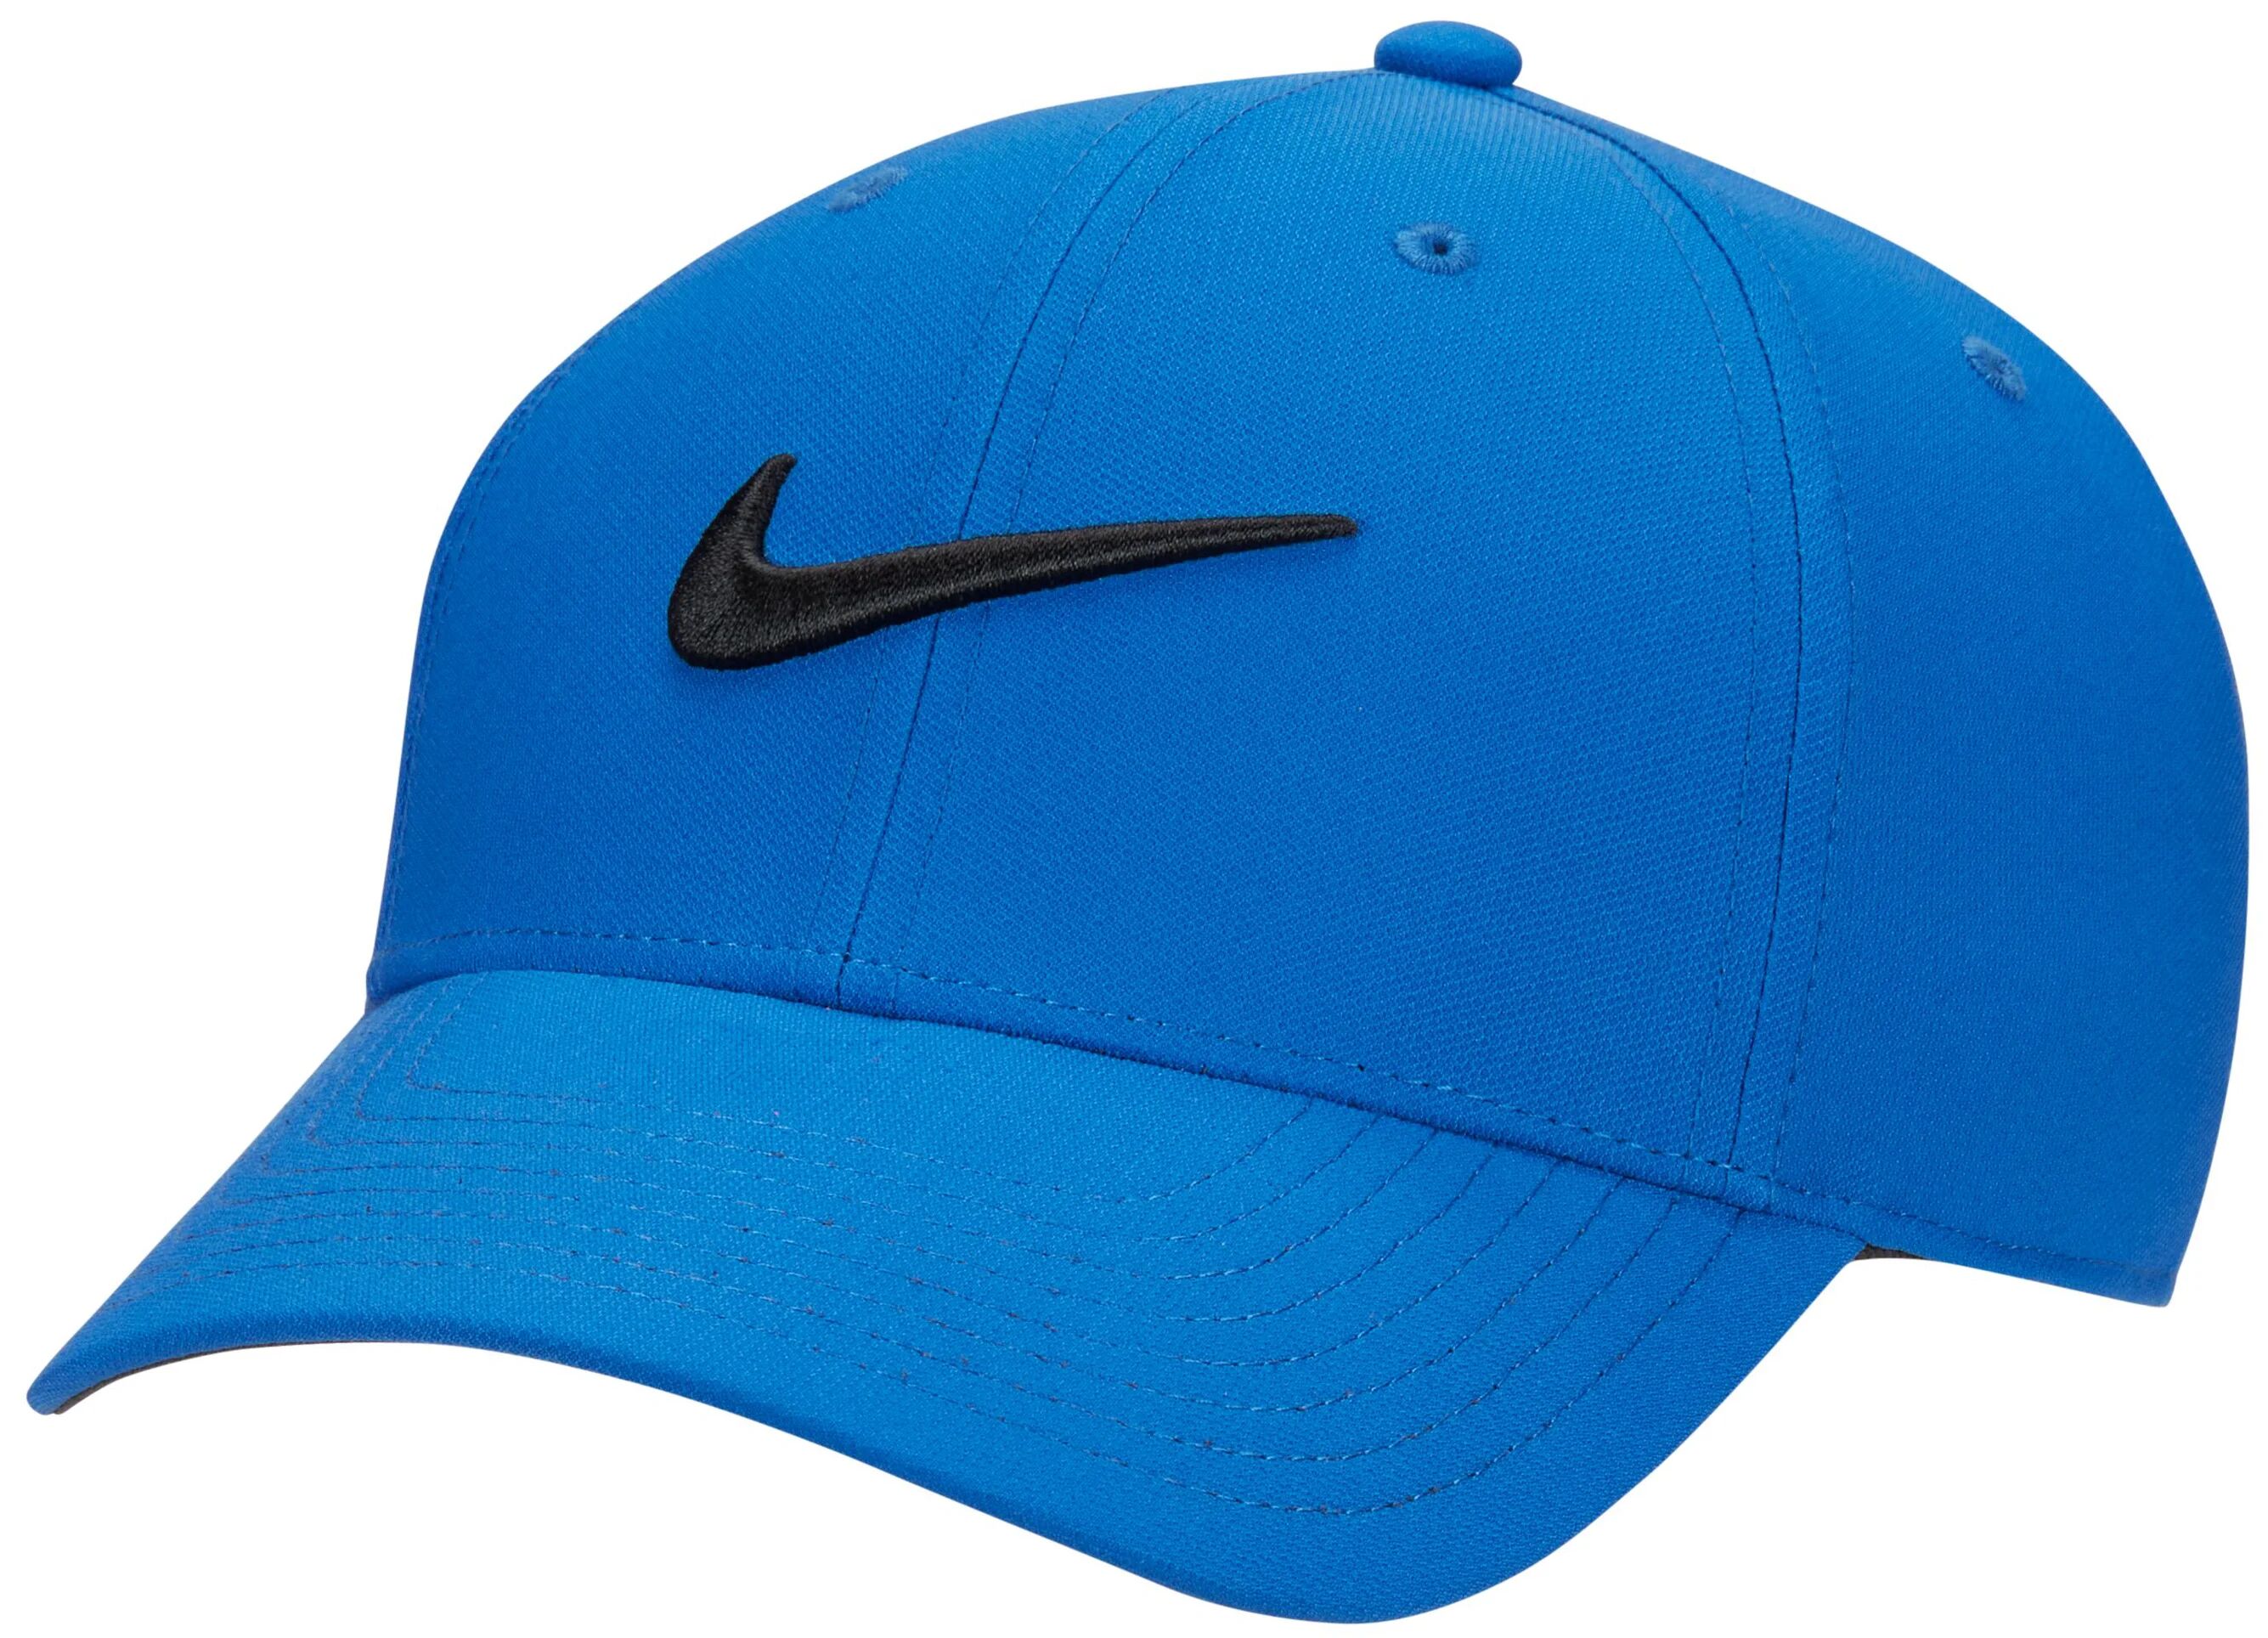 Nike Dri-FIT Club Structured Swoosh Men's Golf Hat - Blue, Size: Medium/Large